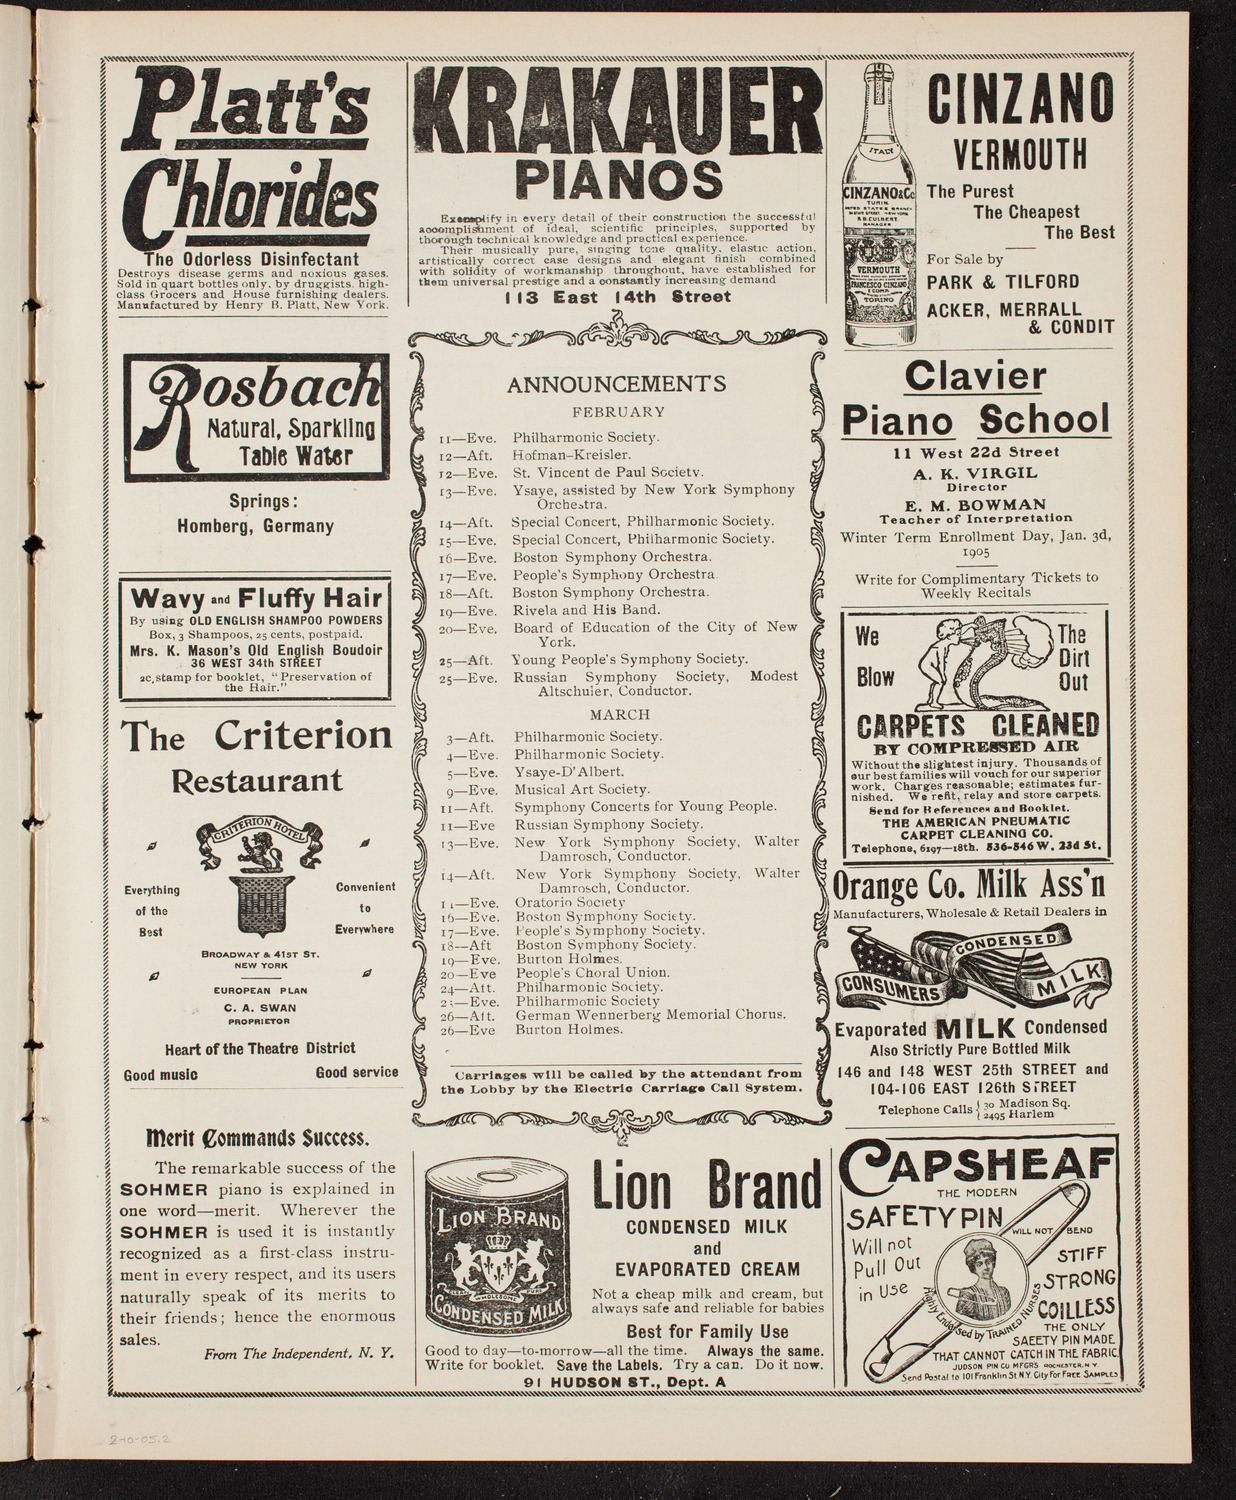 New York Philharmonic, February 10, 1905, program page 3